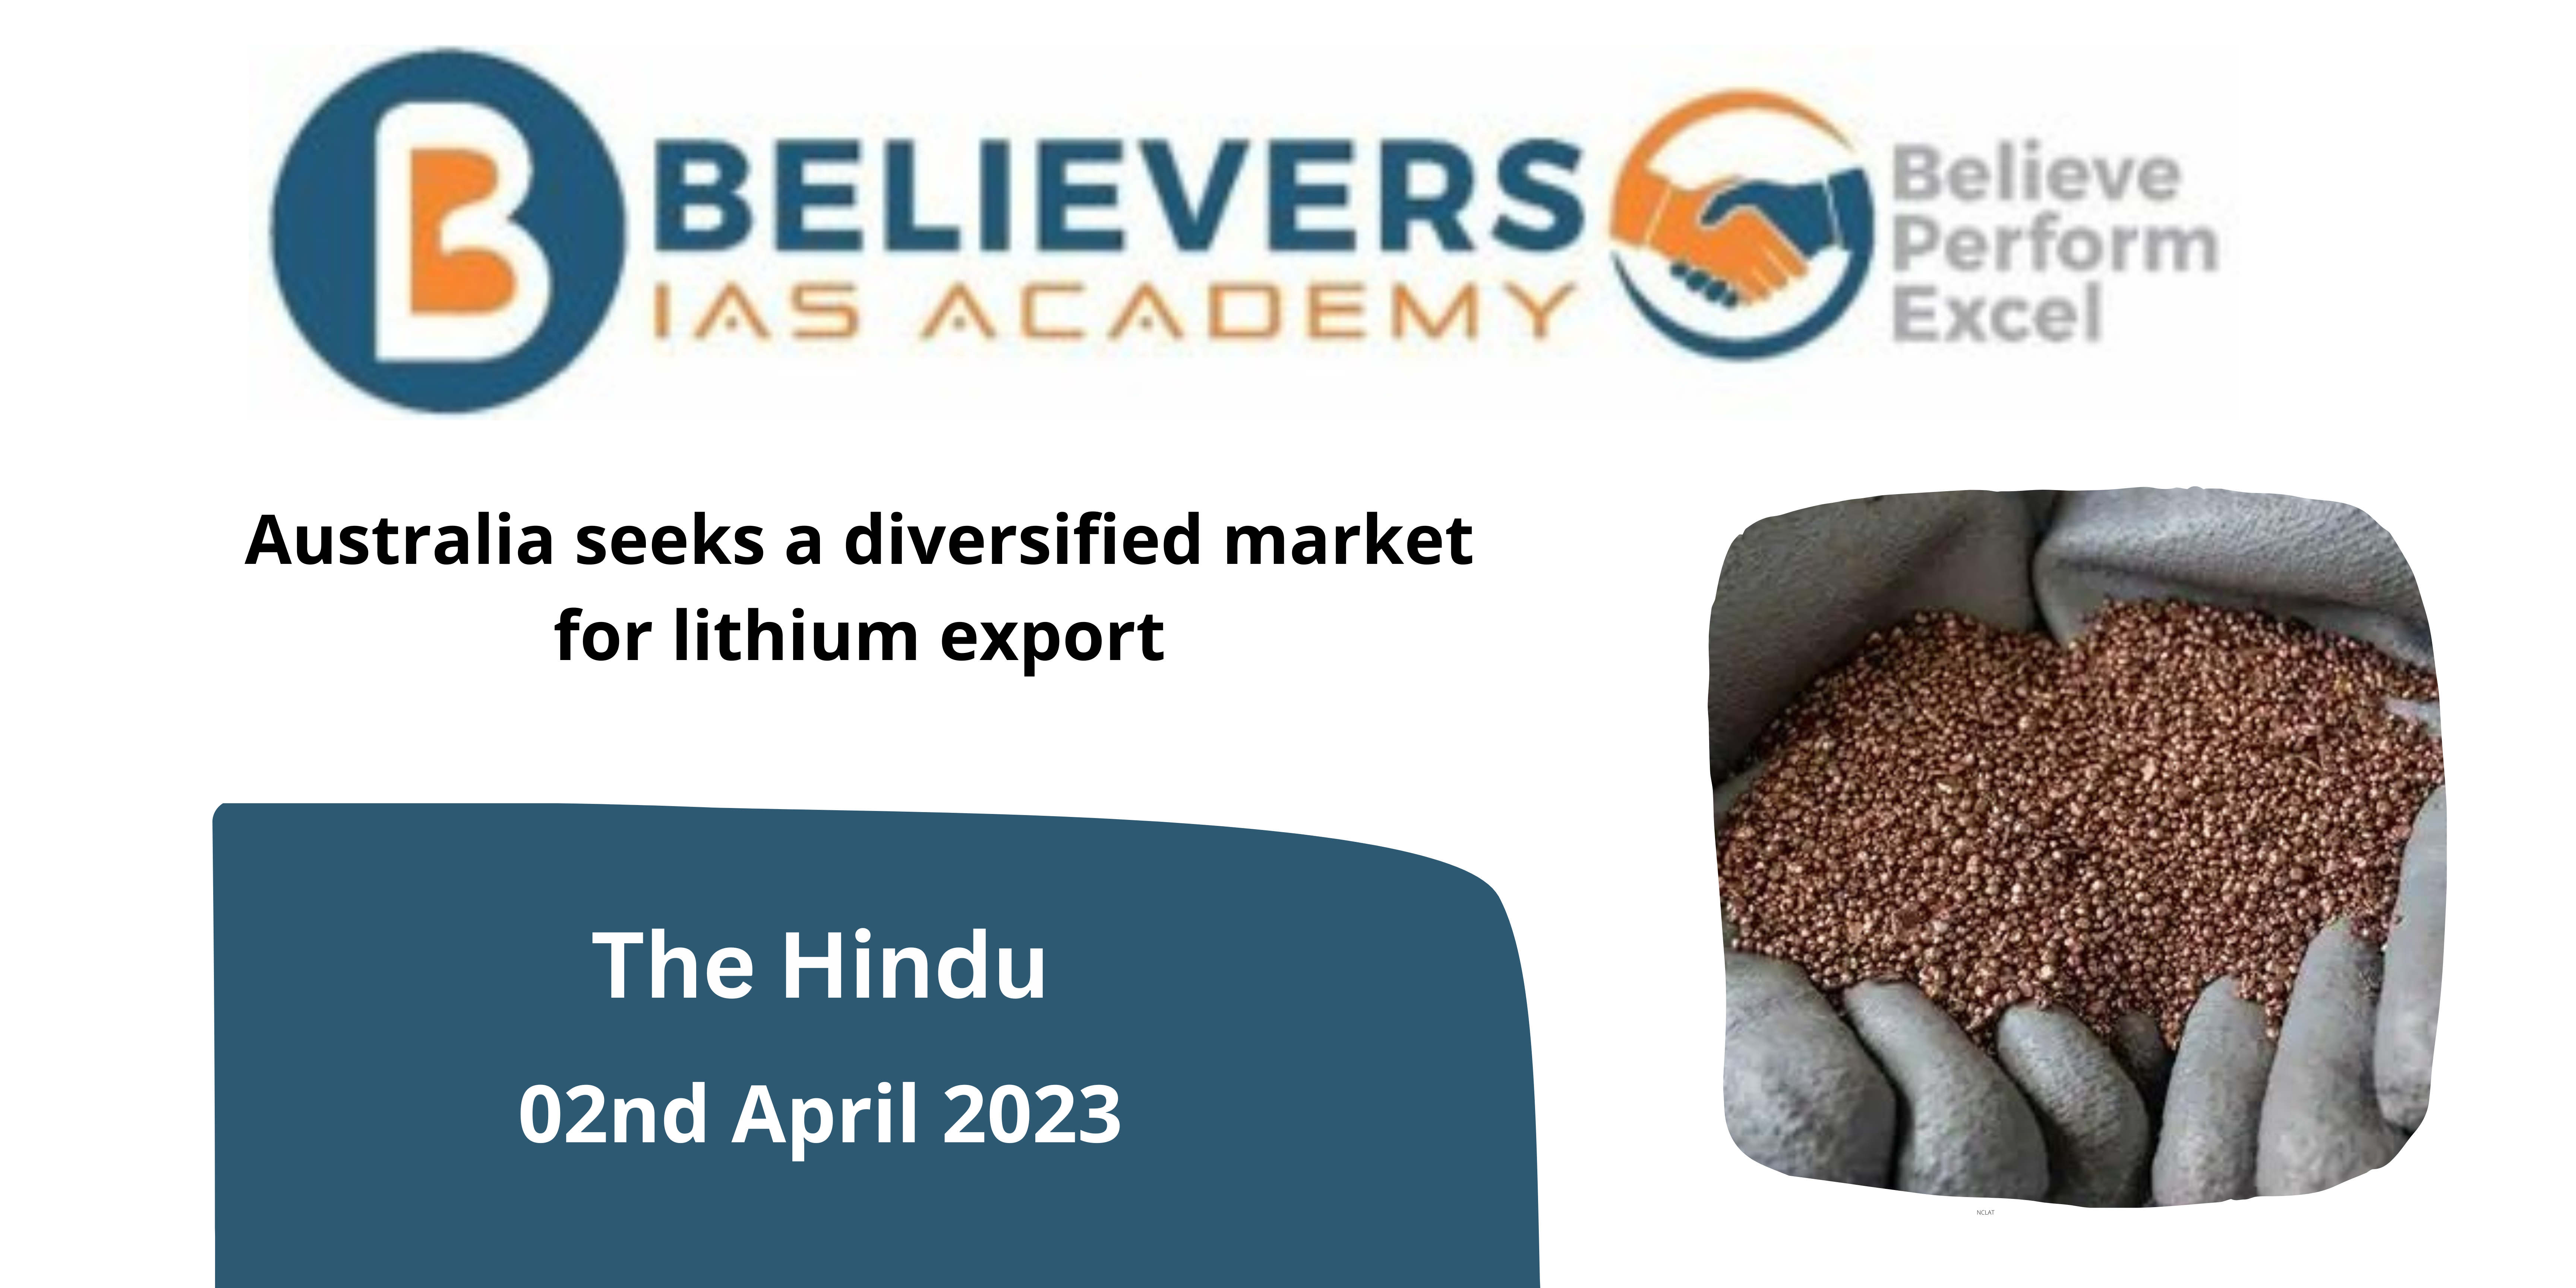 Australia's Quest: Diversifying Lithium Export Markets